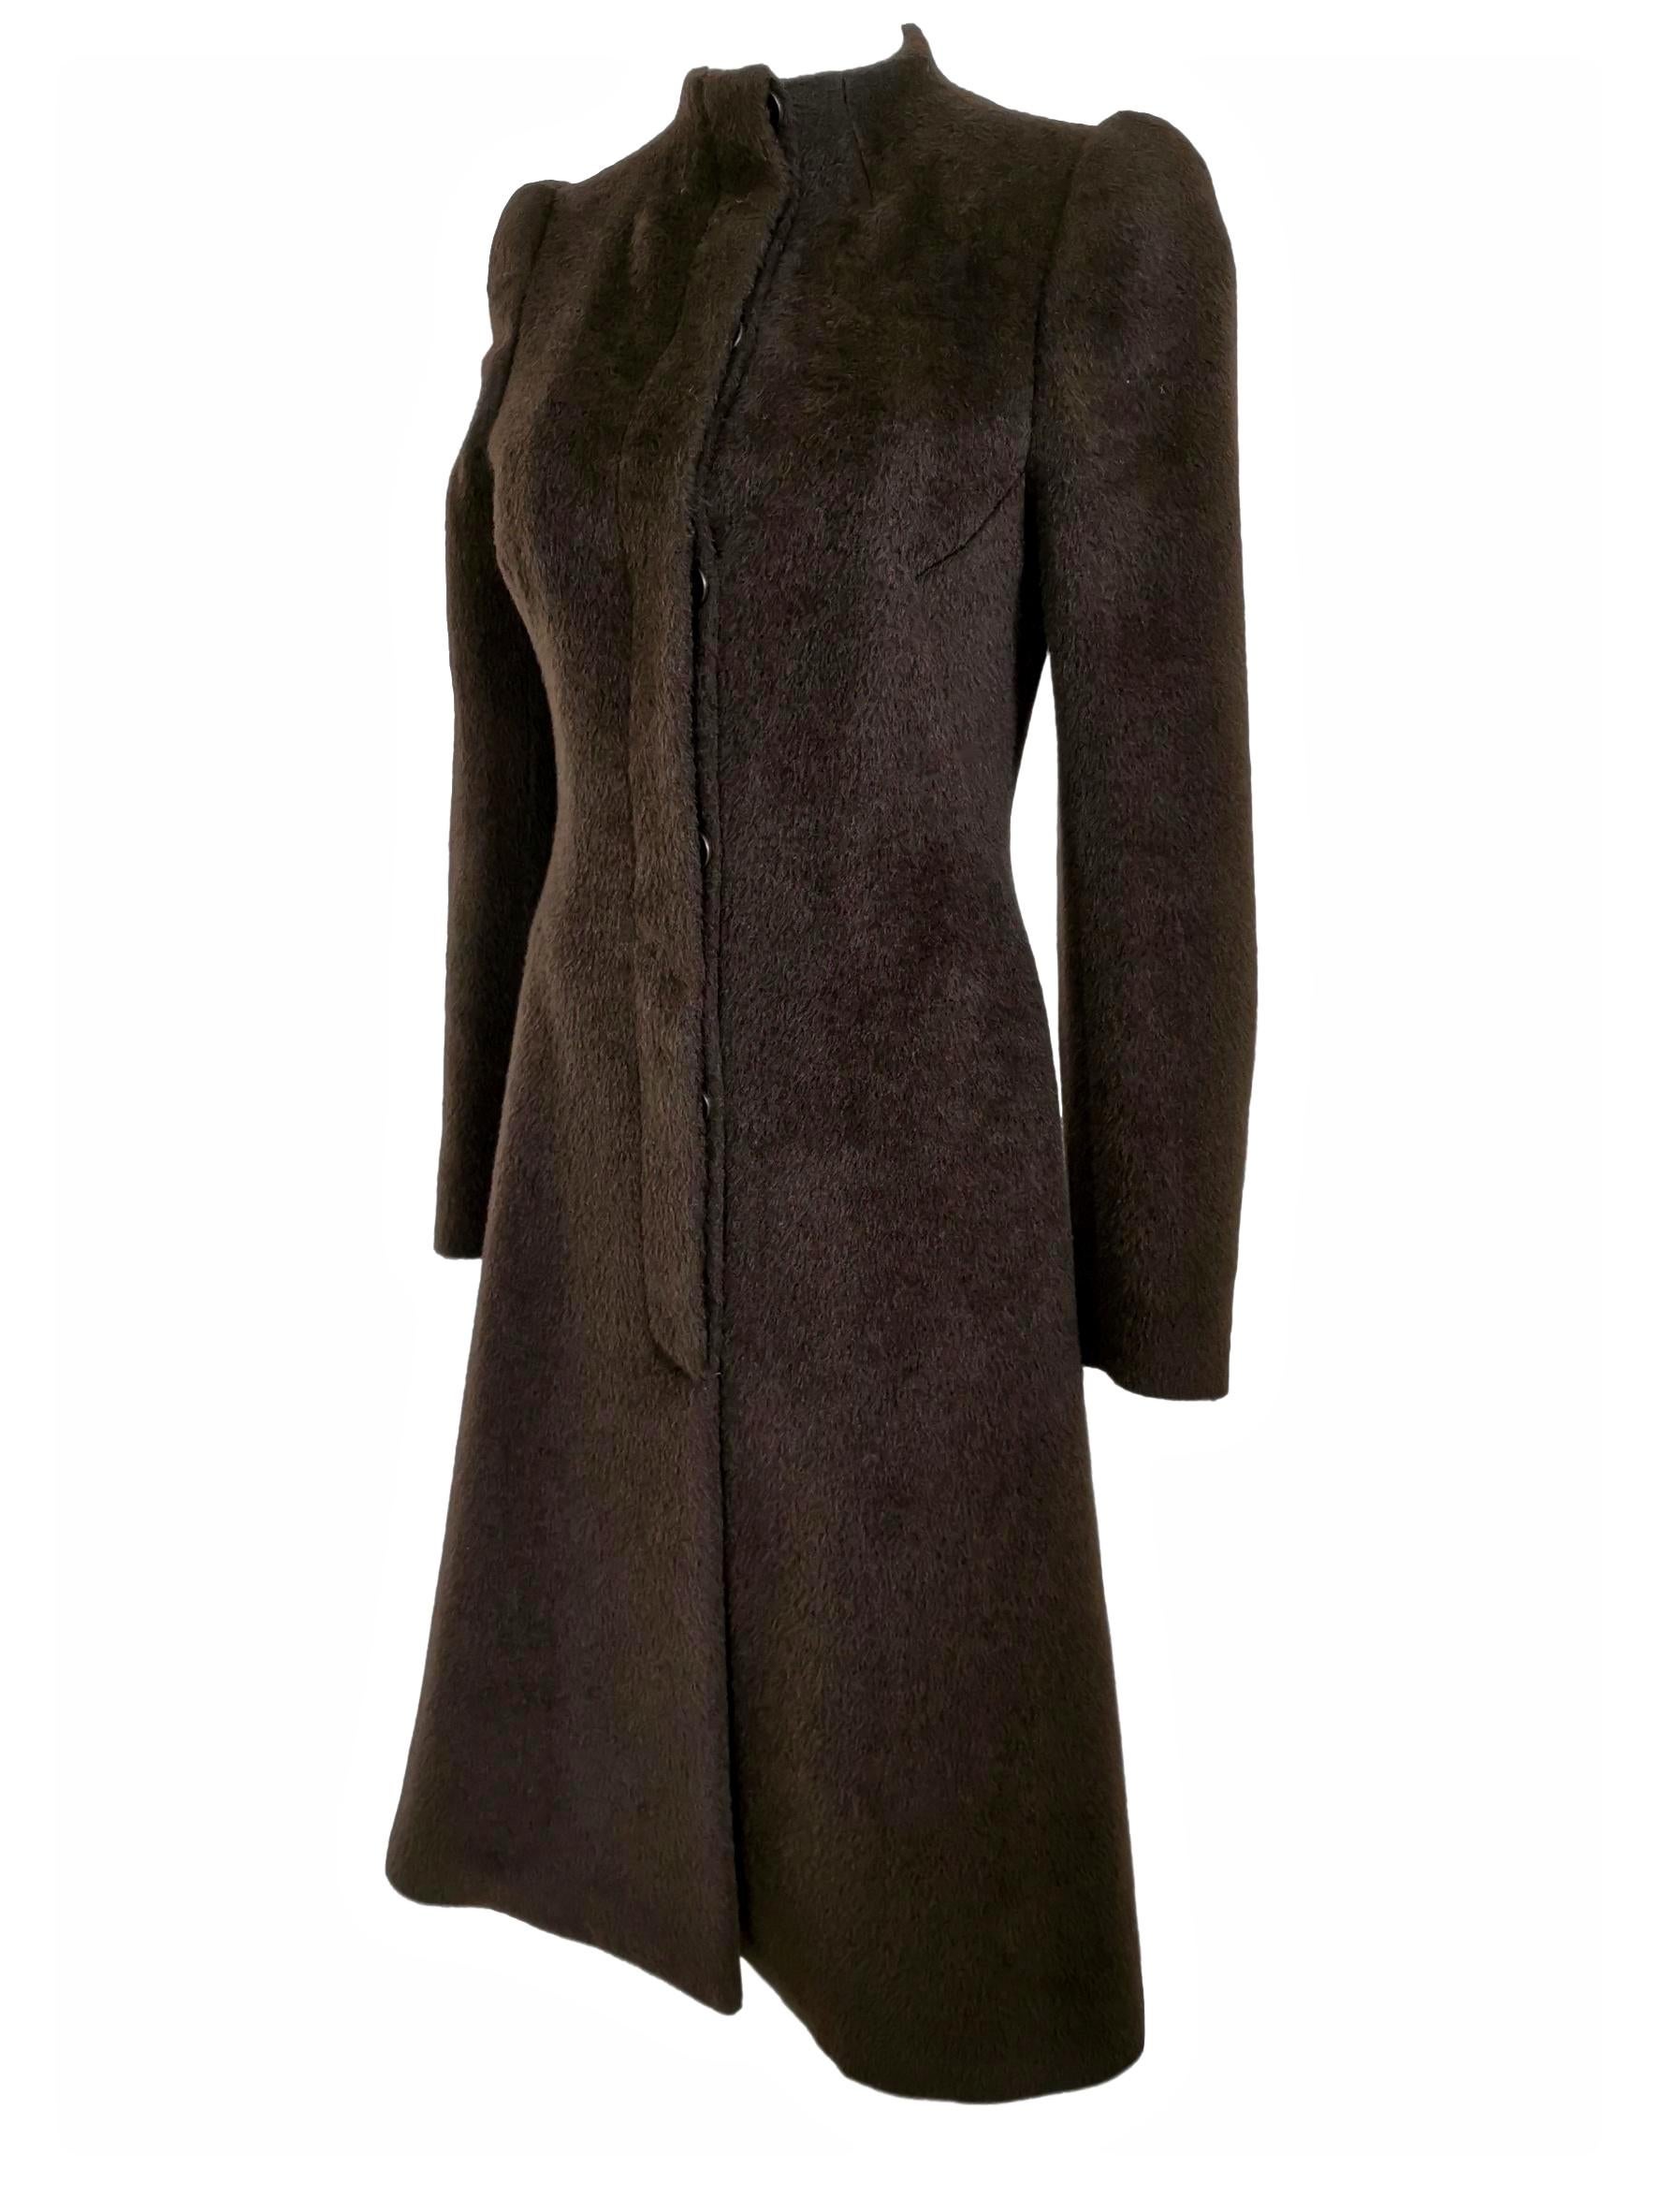 Alexander McQueen
1998 Joan Collection
Mohair, Alpaca and Wool
Perfect Winter Warmer Coat
Size 38